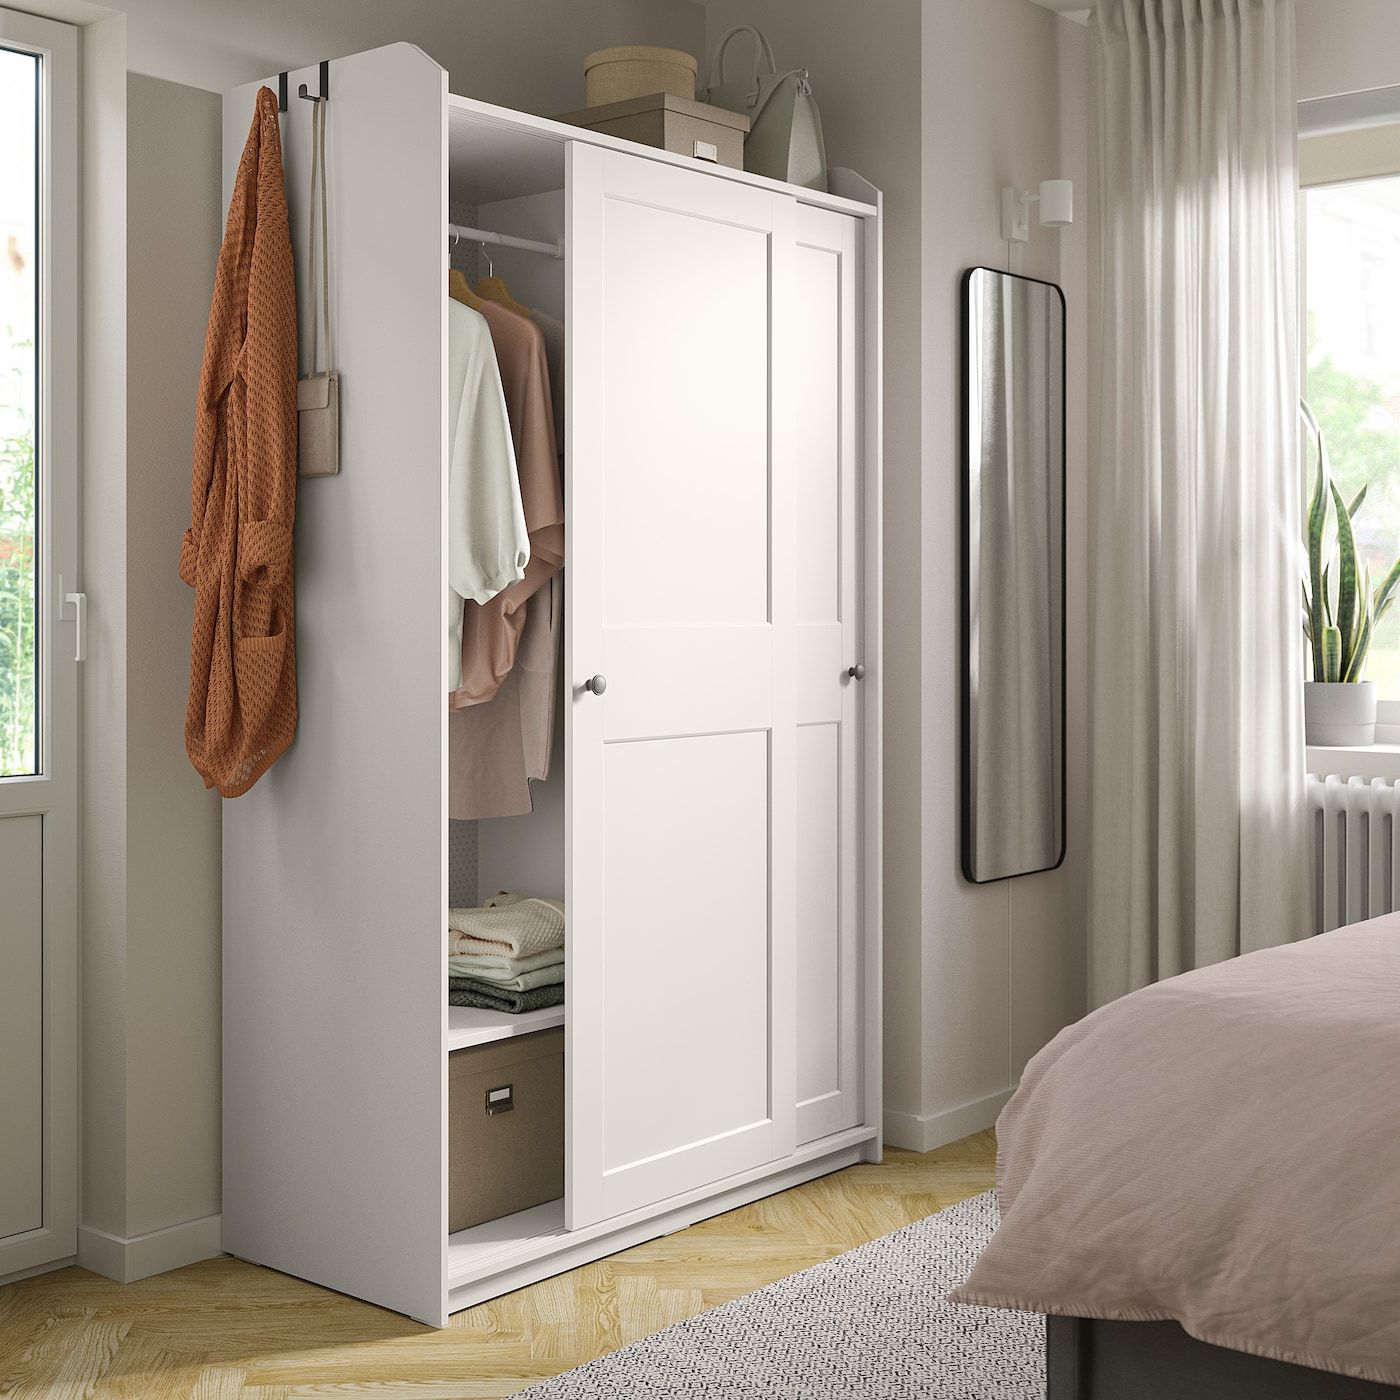 Hauga Wardrobe With Sliding Doors, White, 118x55x199 Cm – Ikea With Regard To 4 Door White Wardrobes (View 11 of 20)